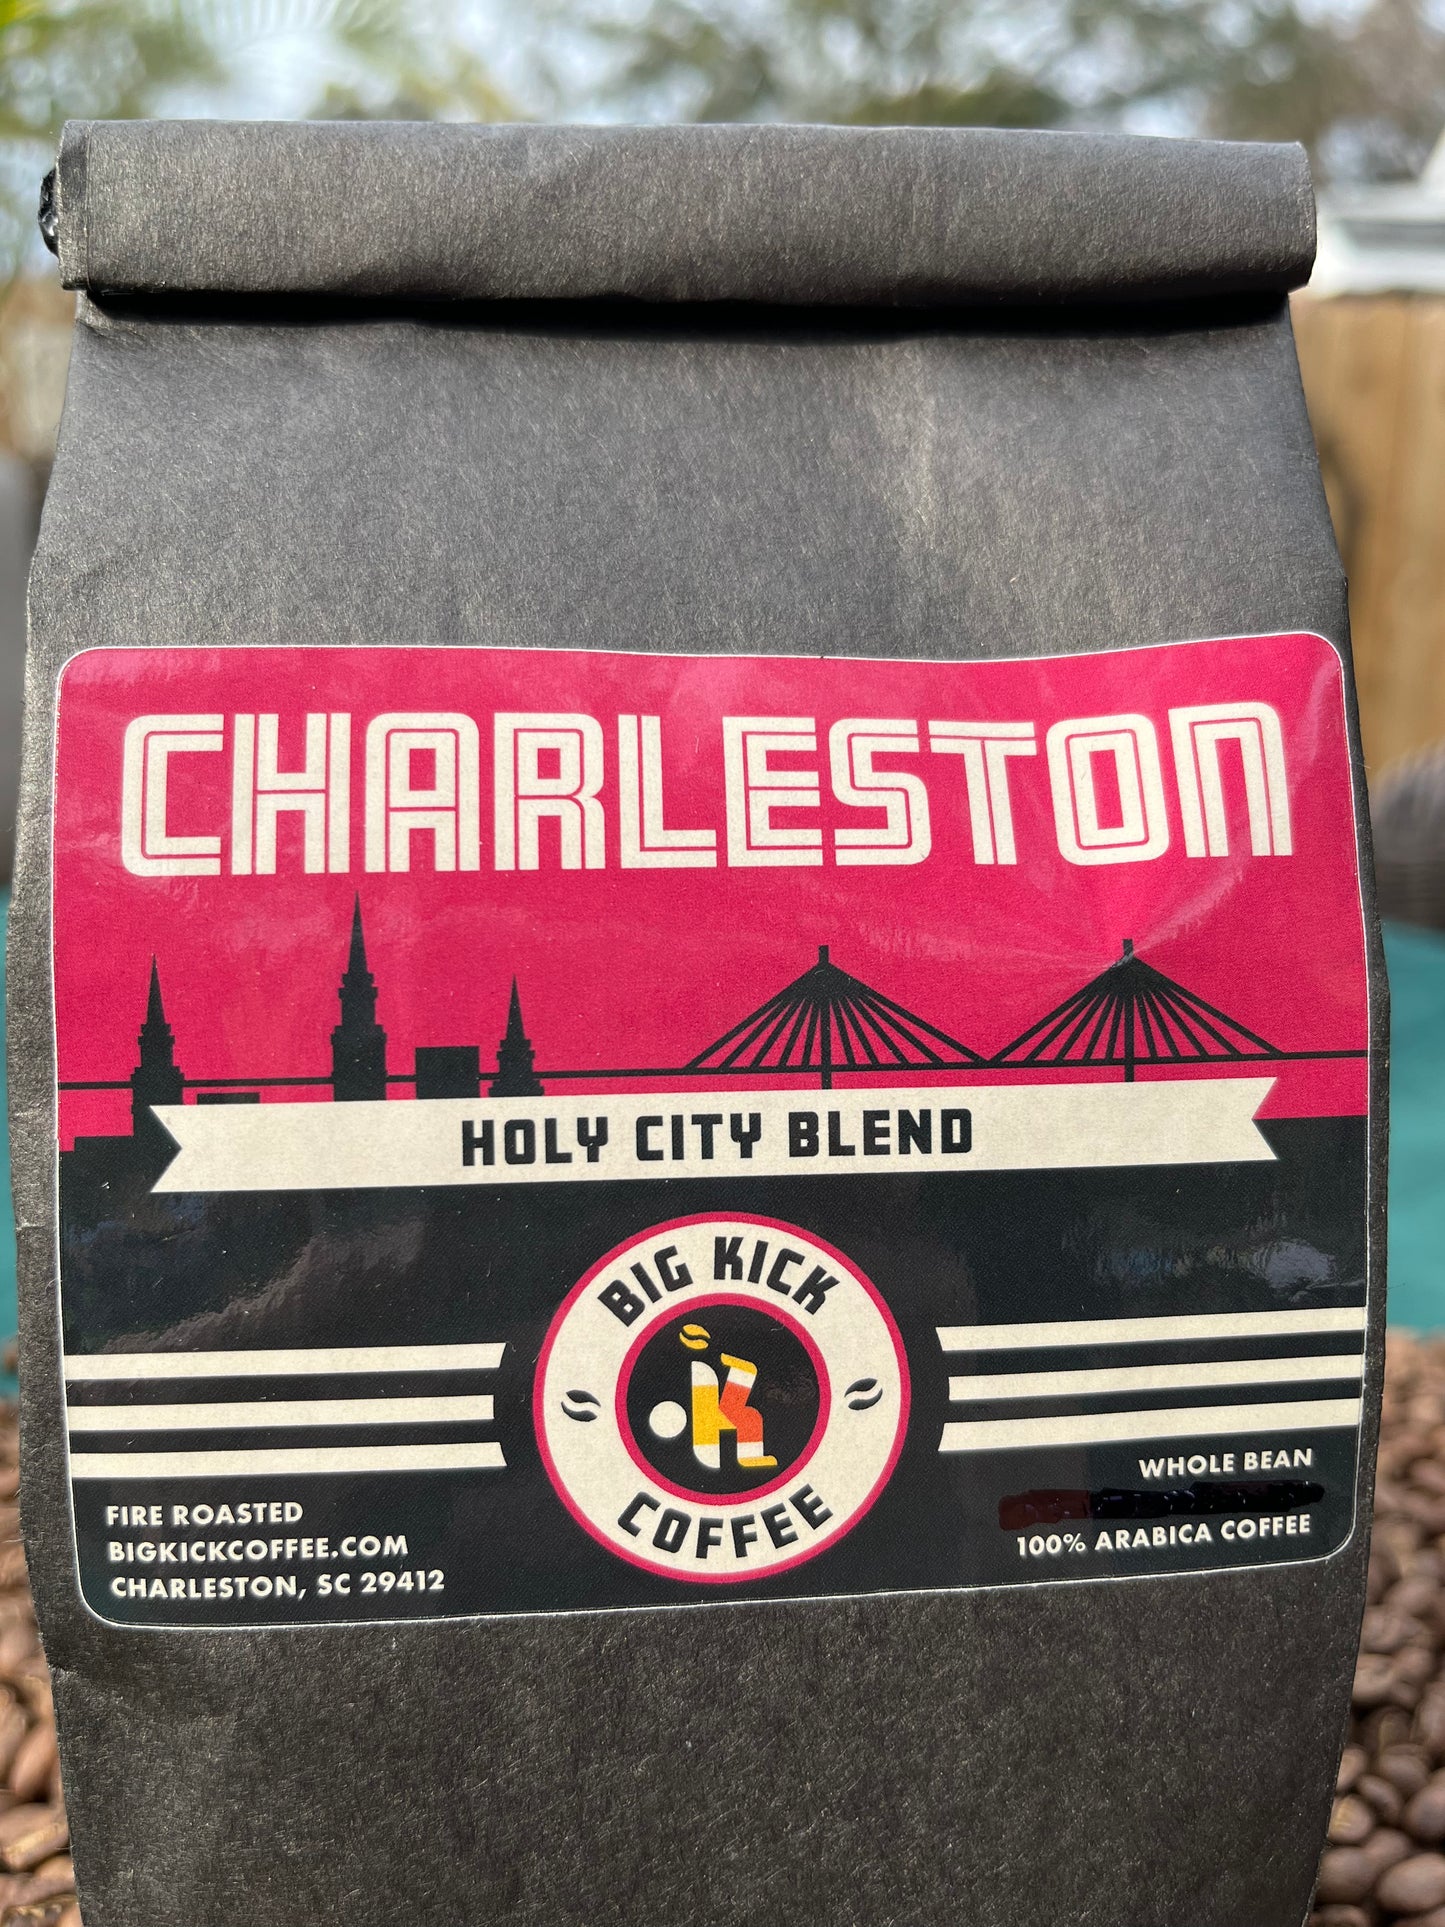 Charleston Holy City Blend